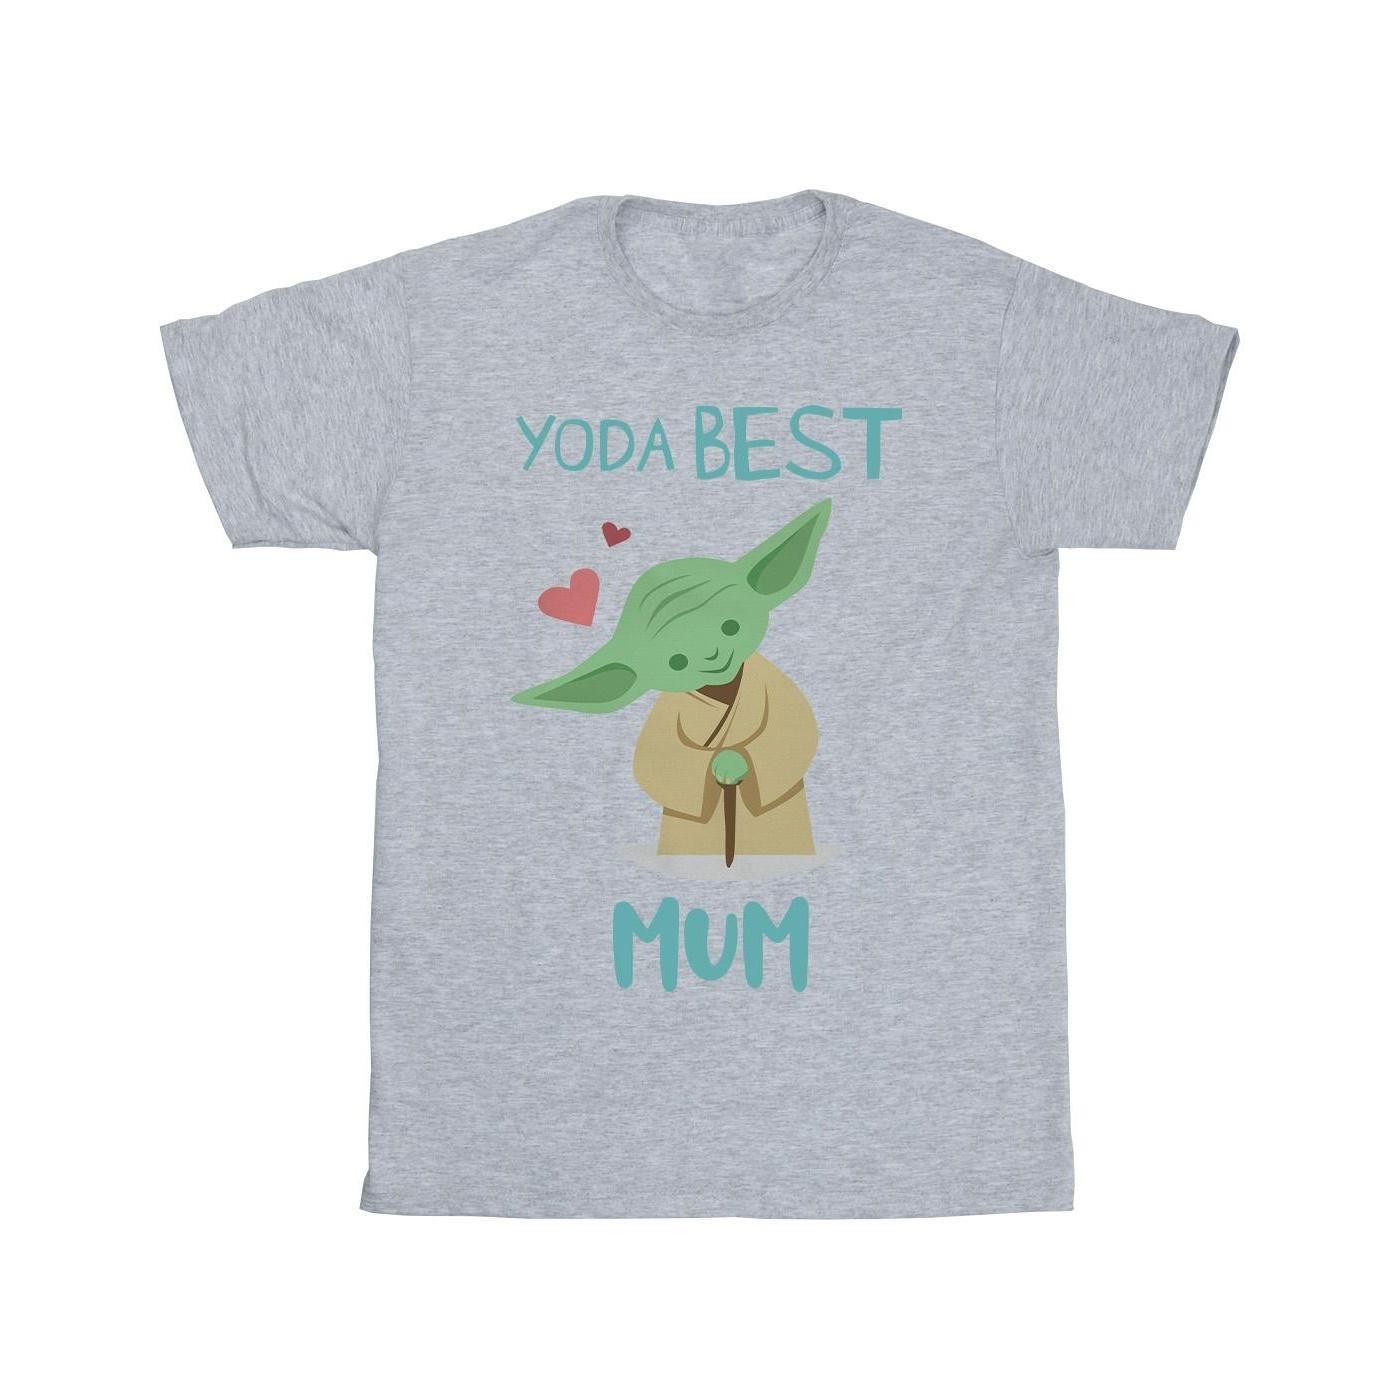 Star Wars Boys Yoda Best Mum T-Shirt (Sports Grey) (7-8 Years)